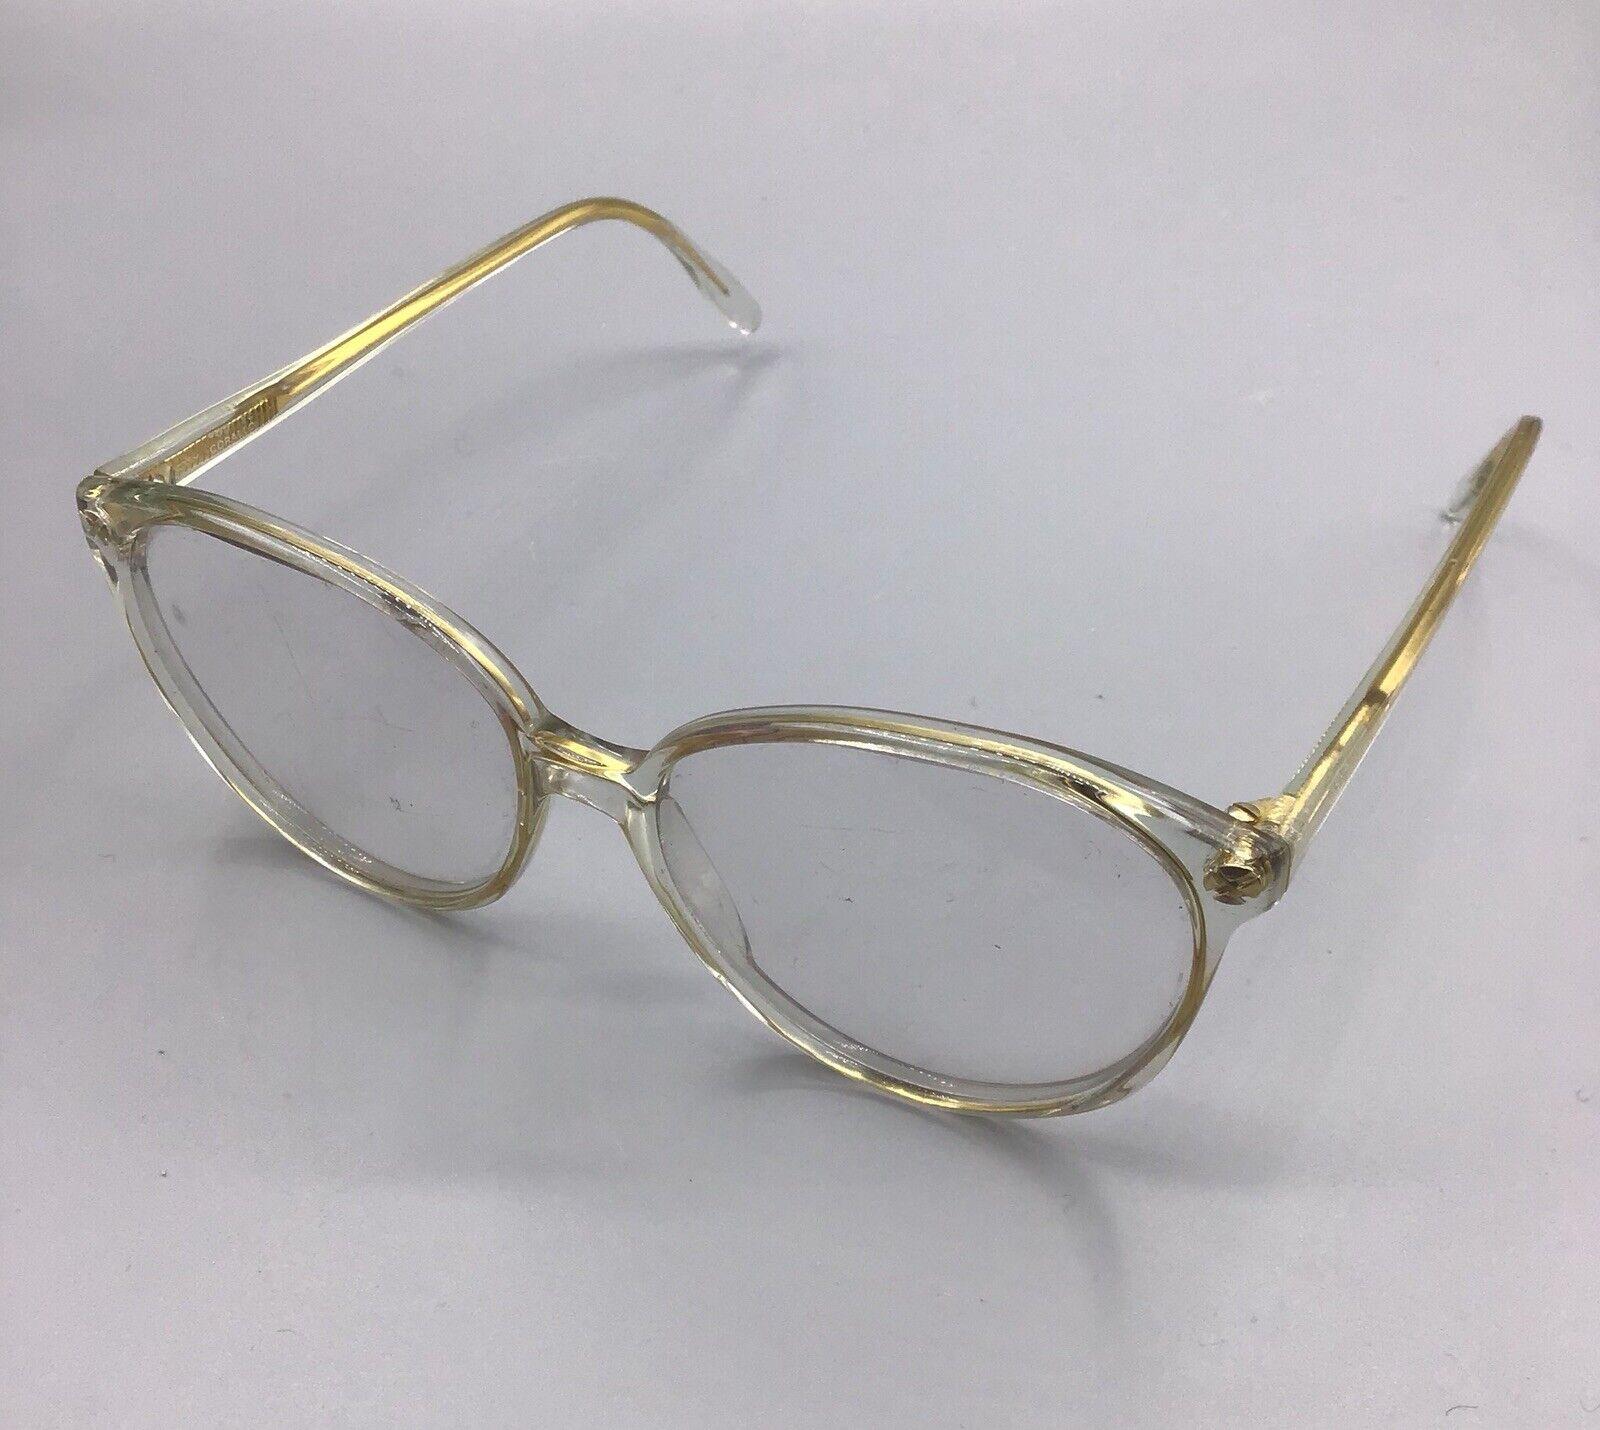 Morwen Filo de Oro Frame Italy occhiale eyewear brillen lunettes CORALLO